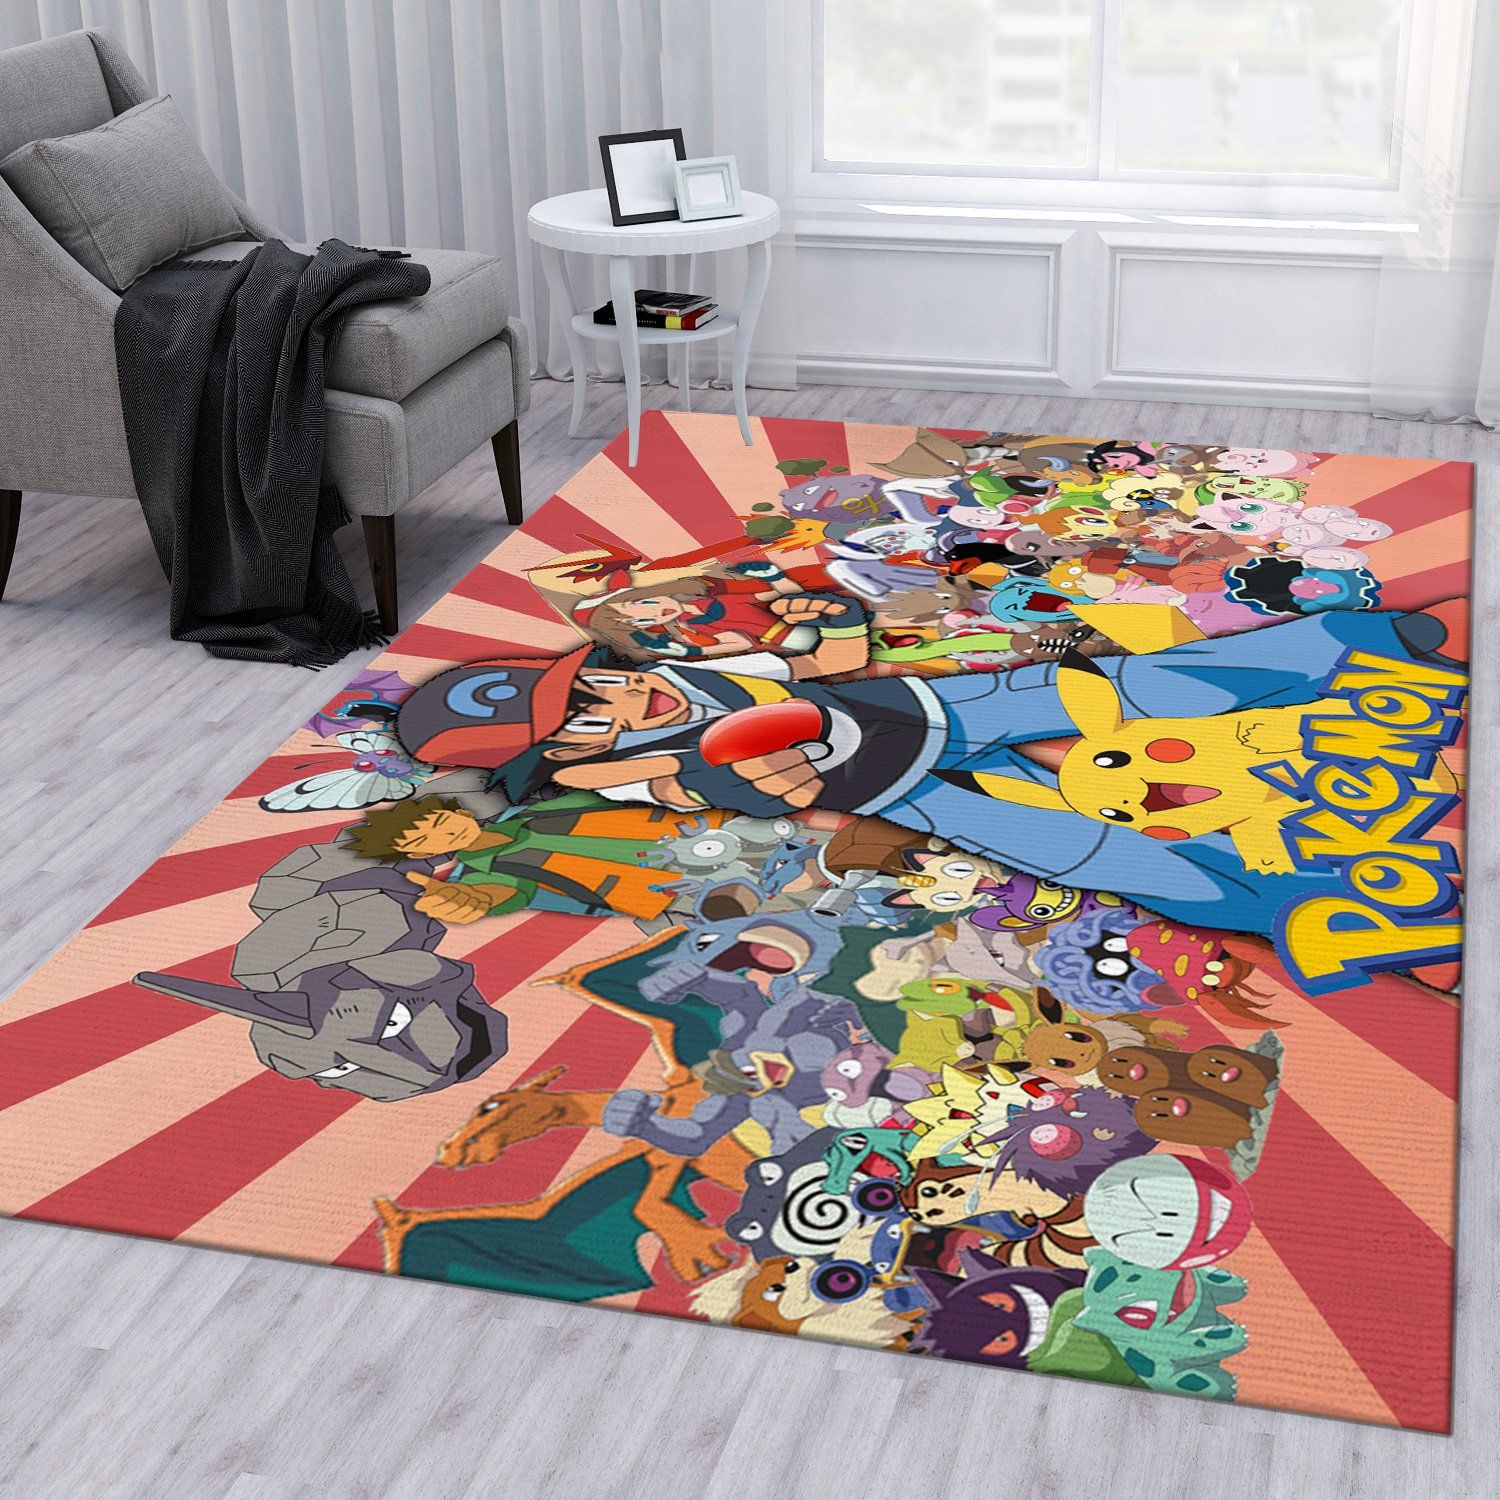 Anime Carpet Living Room, Anime Carpets Bed Room